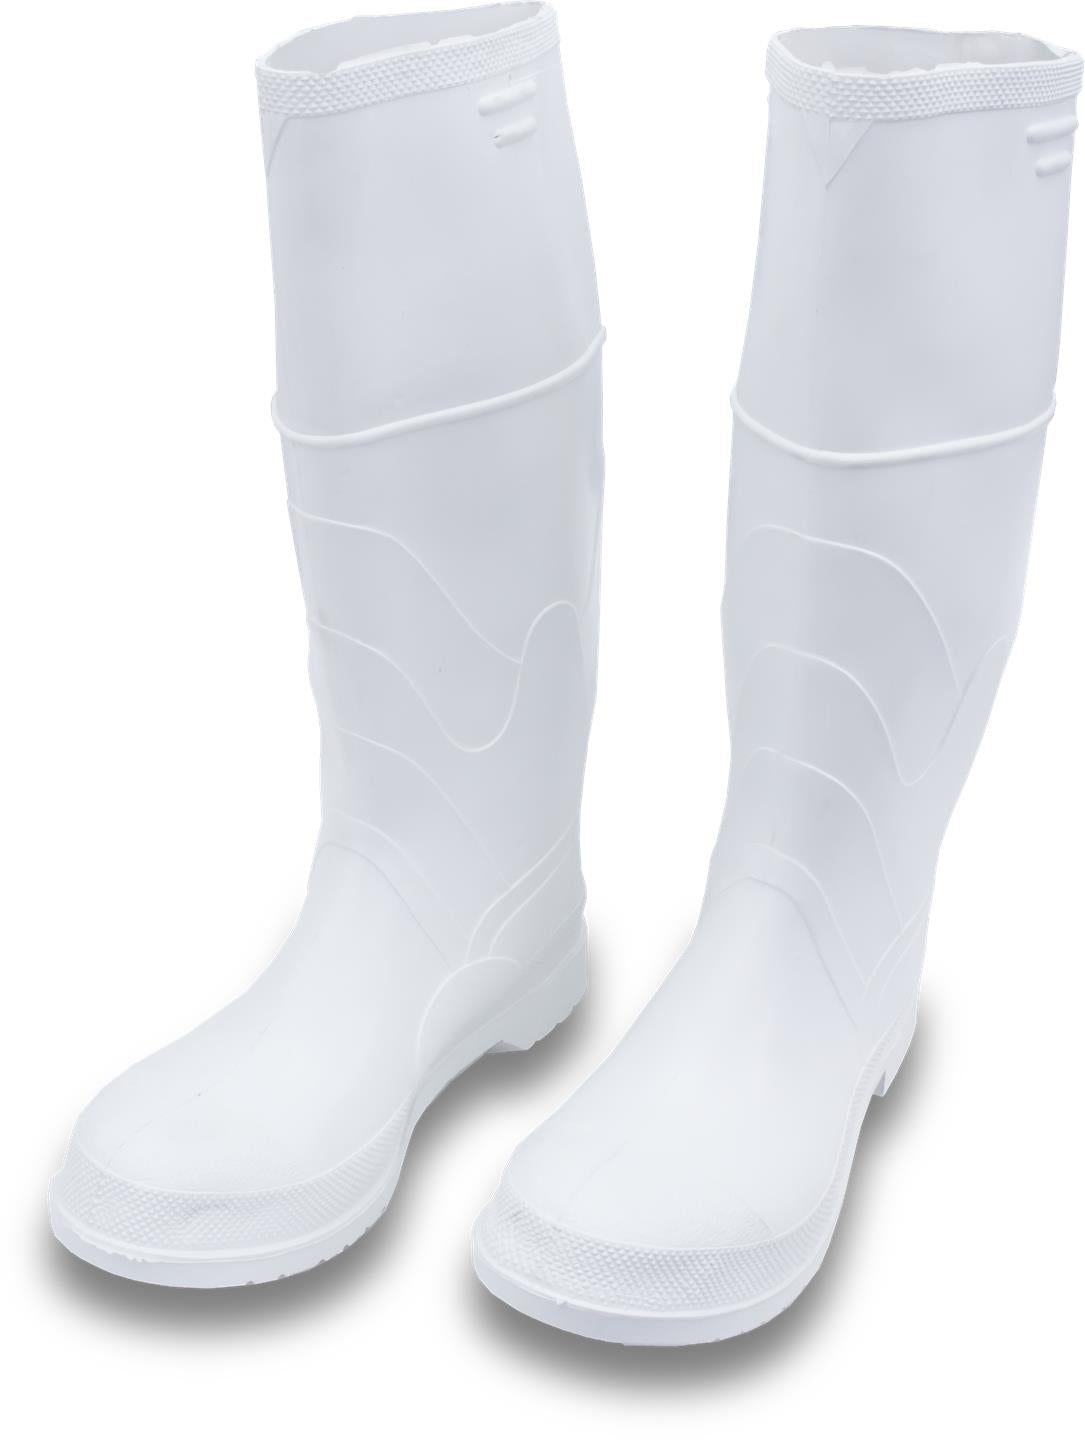 Marshalltown 13437 White Boots - Size 7